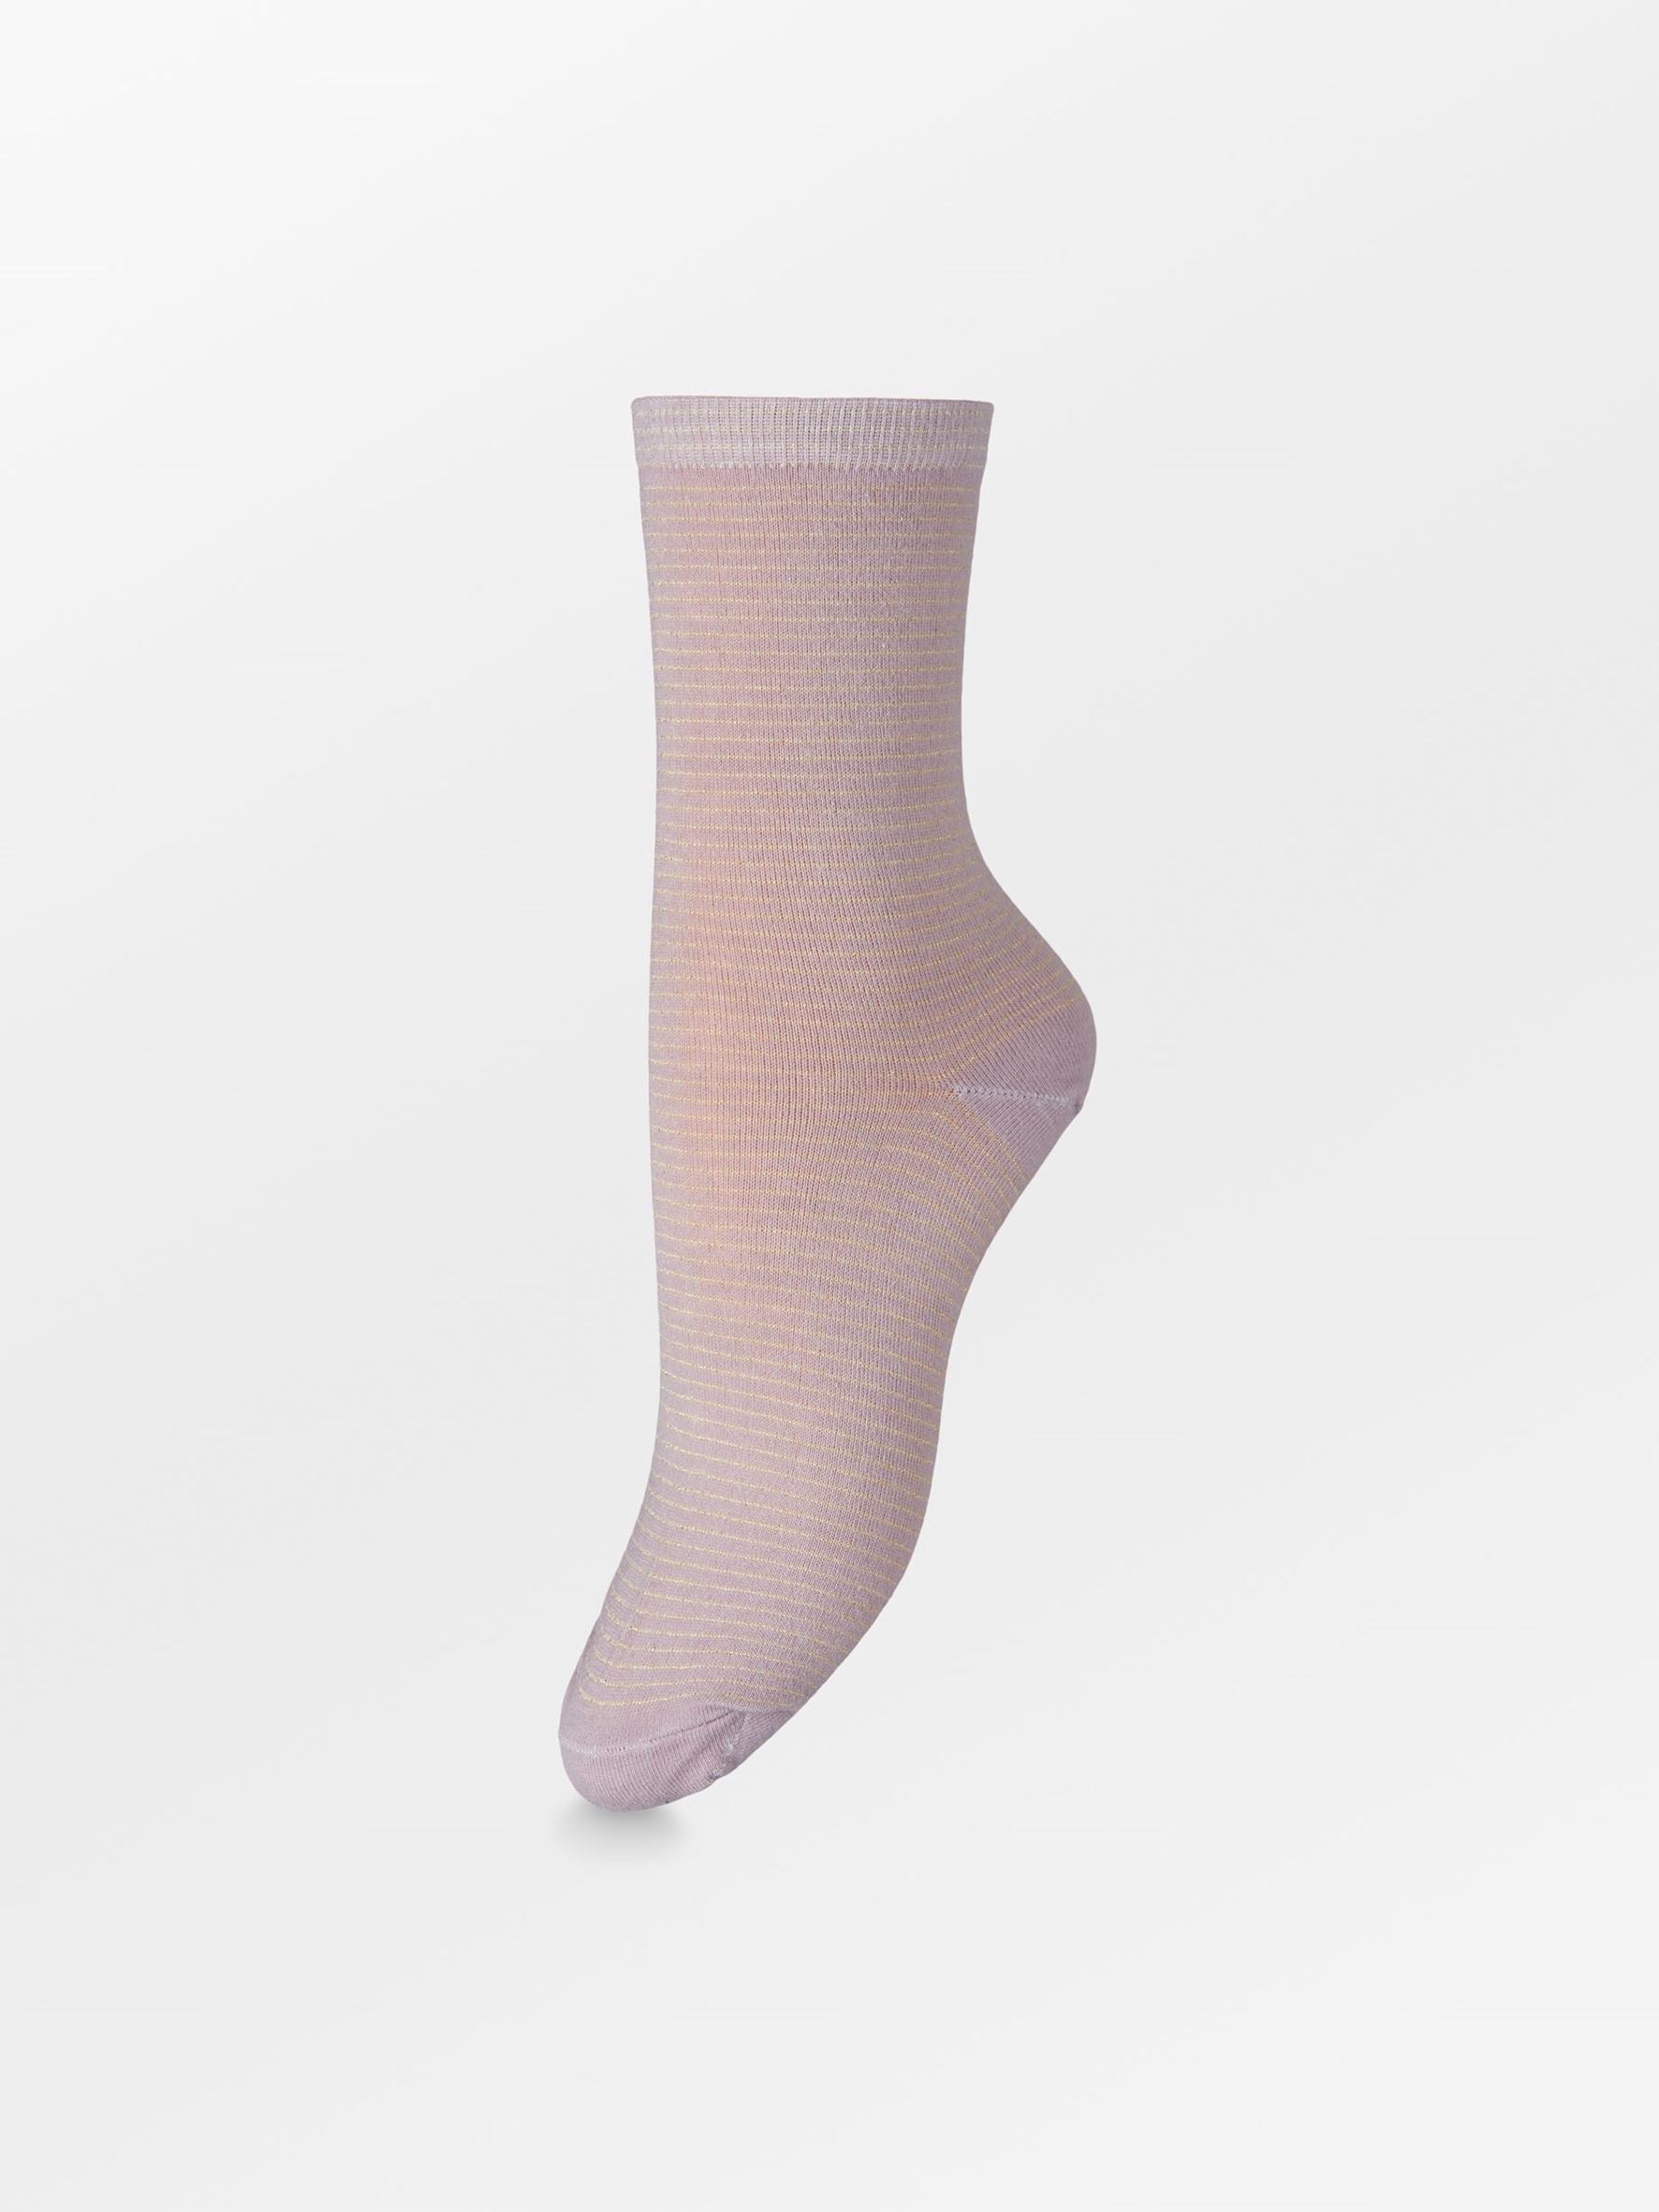 Becksöndergaard, Dover Stripe Sock  - Simple Taupe, archive, archive, sale, sale